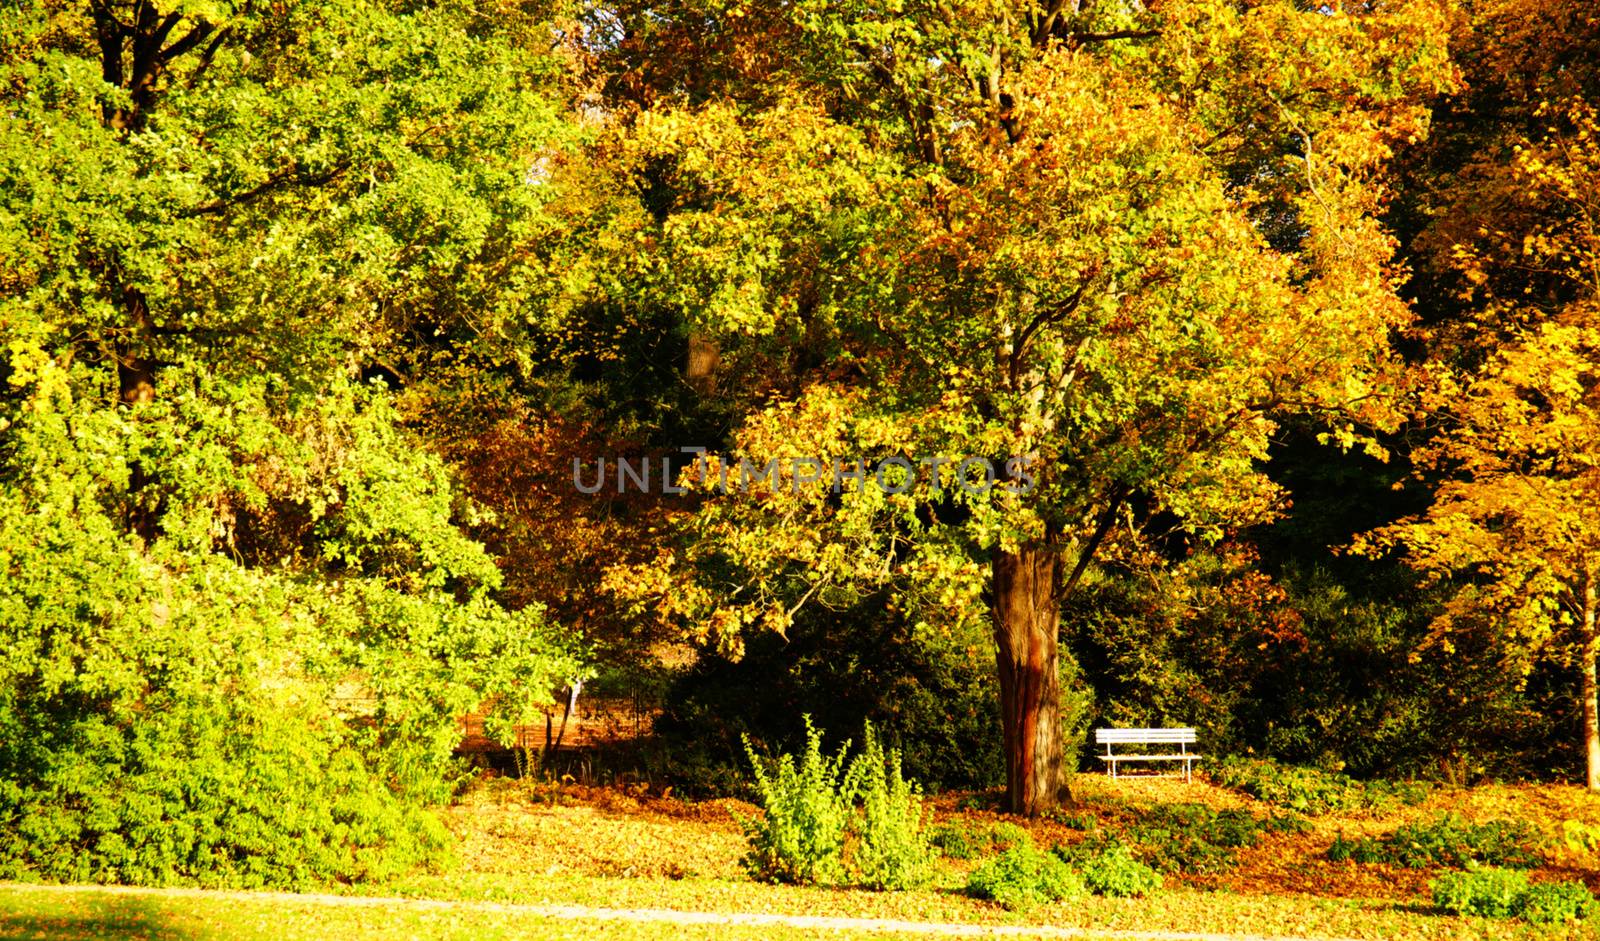 white bench - Autumn in Stirin Castle Park near Prague, Czech Republic by Jindrich_Blecha